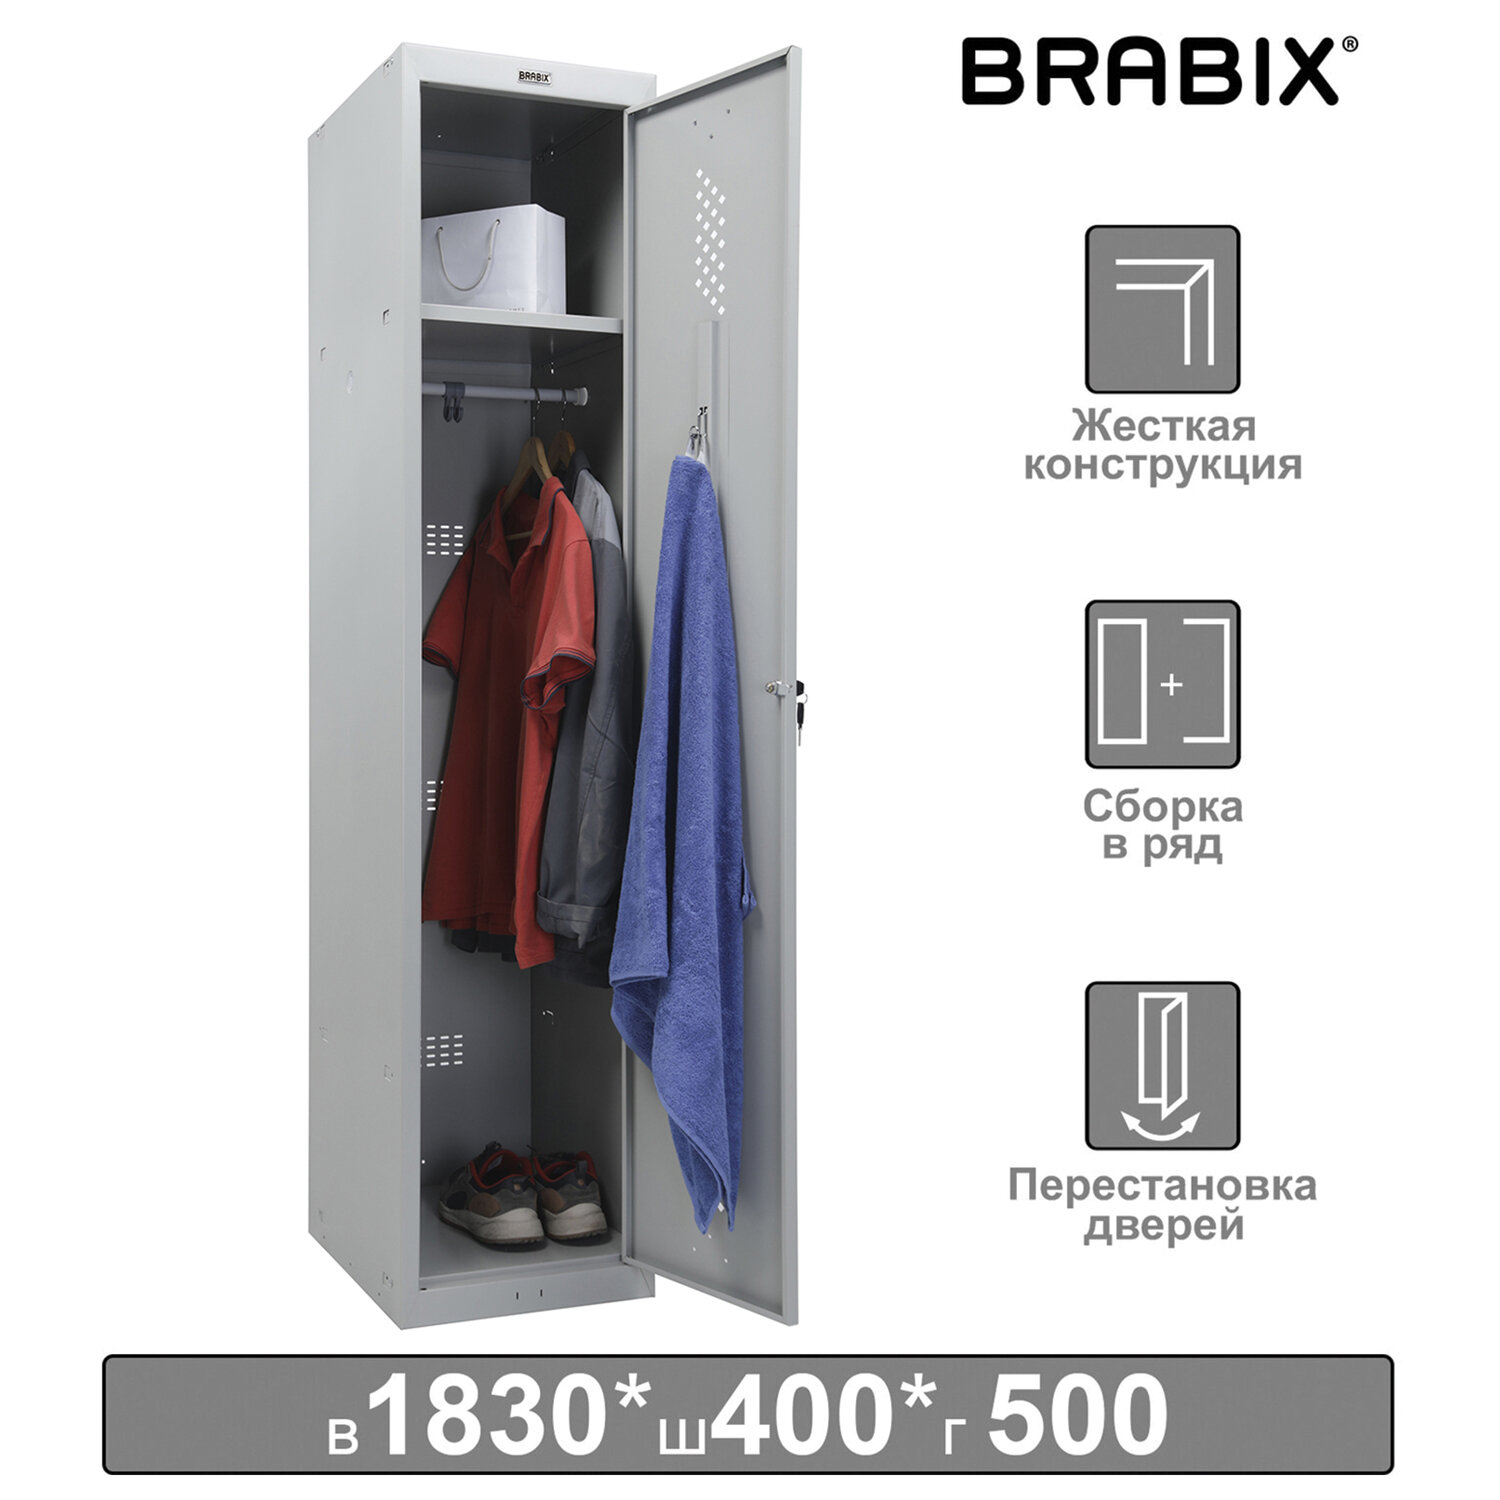 Brabix Шкаф металлический для одежды BRABIX LK 11-40, УСИЛЕННЫЙ, 1 секция, 1830х400х500 мм, 20 кг, 291130, S230BR403102